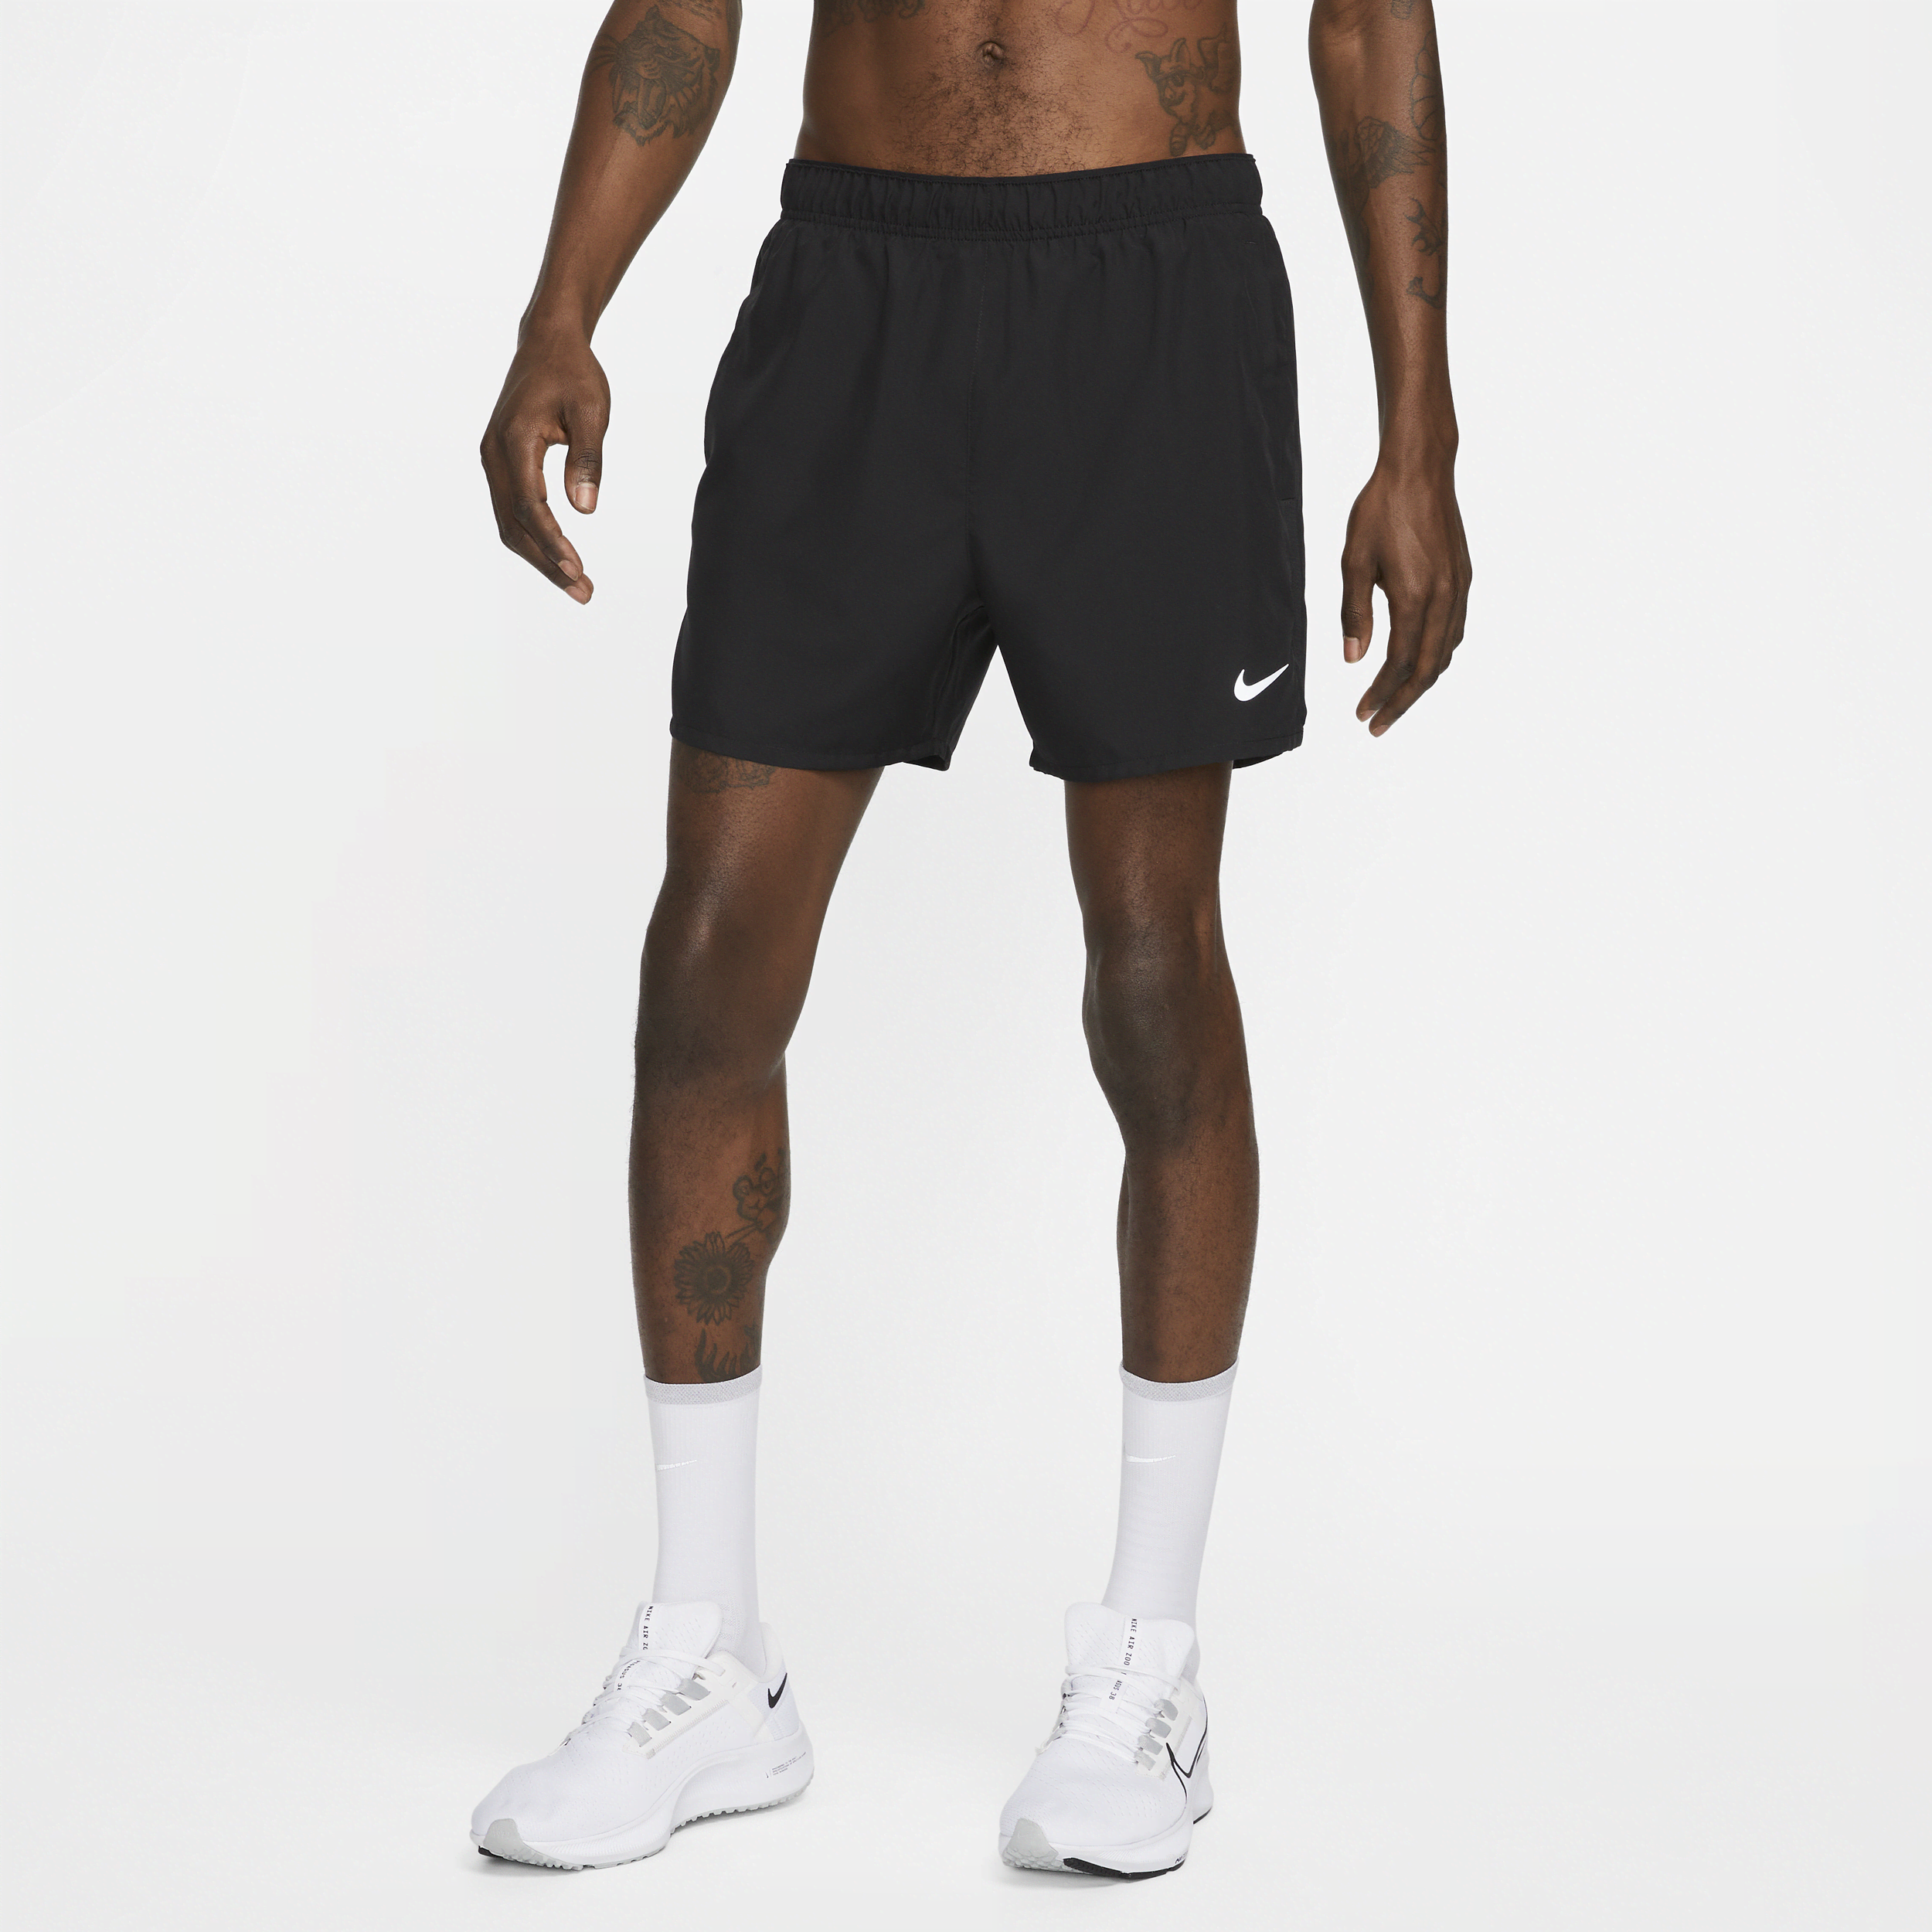 Shorts da running Dri-FIT con slip foderati 13 cm Nike Challenger – Uomo - Nero